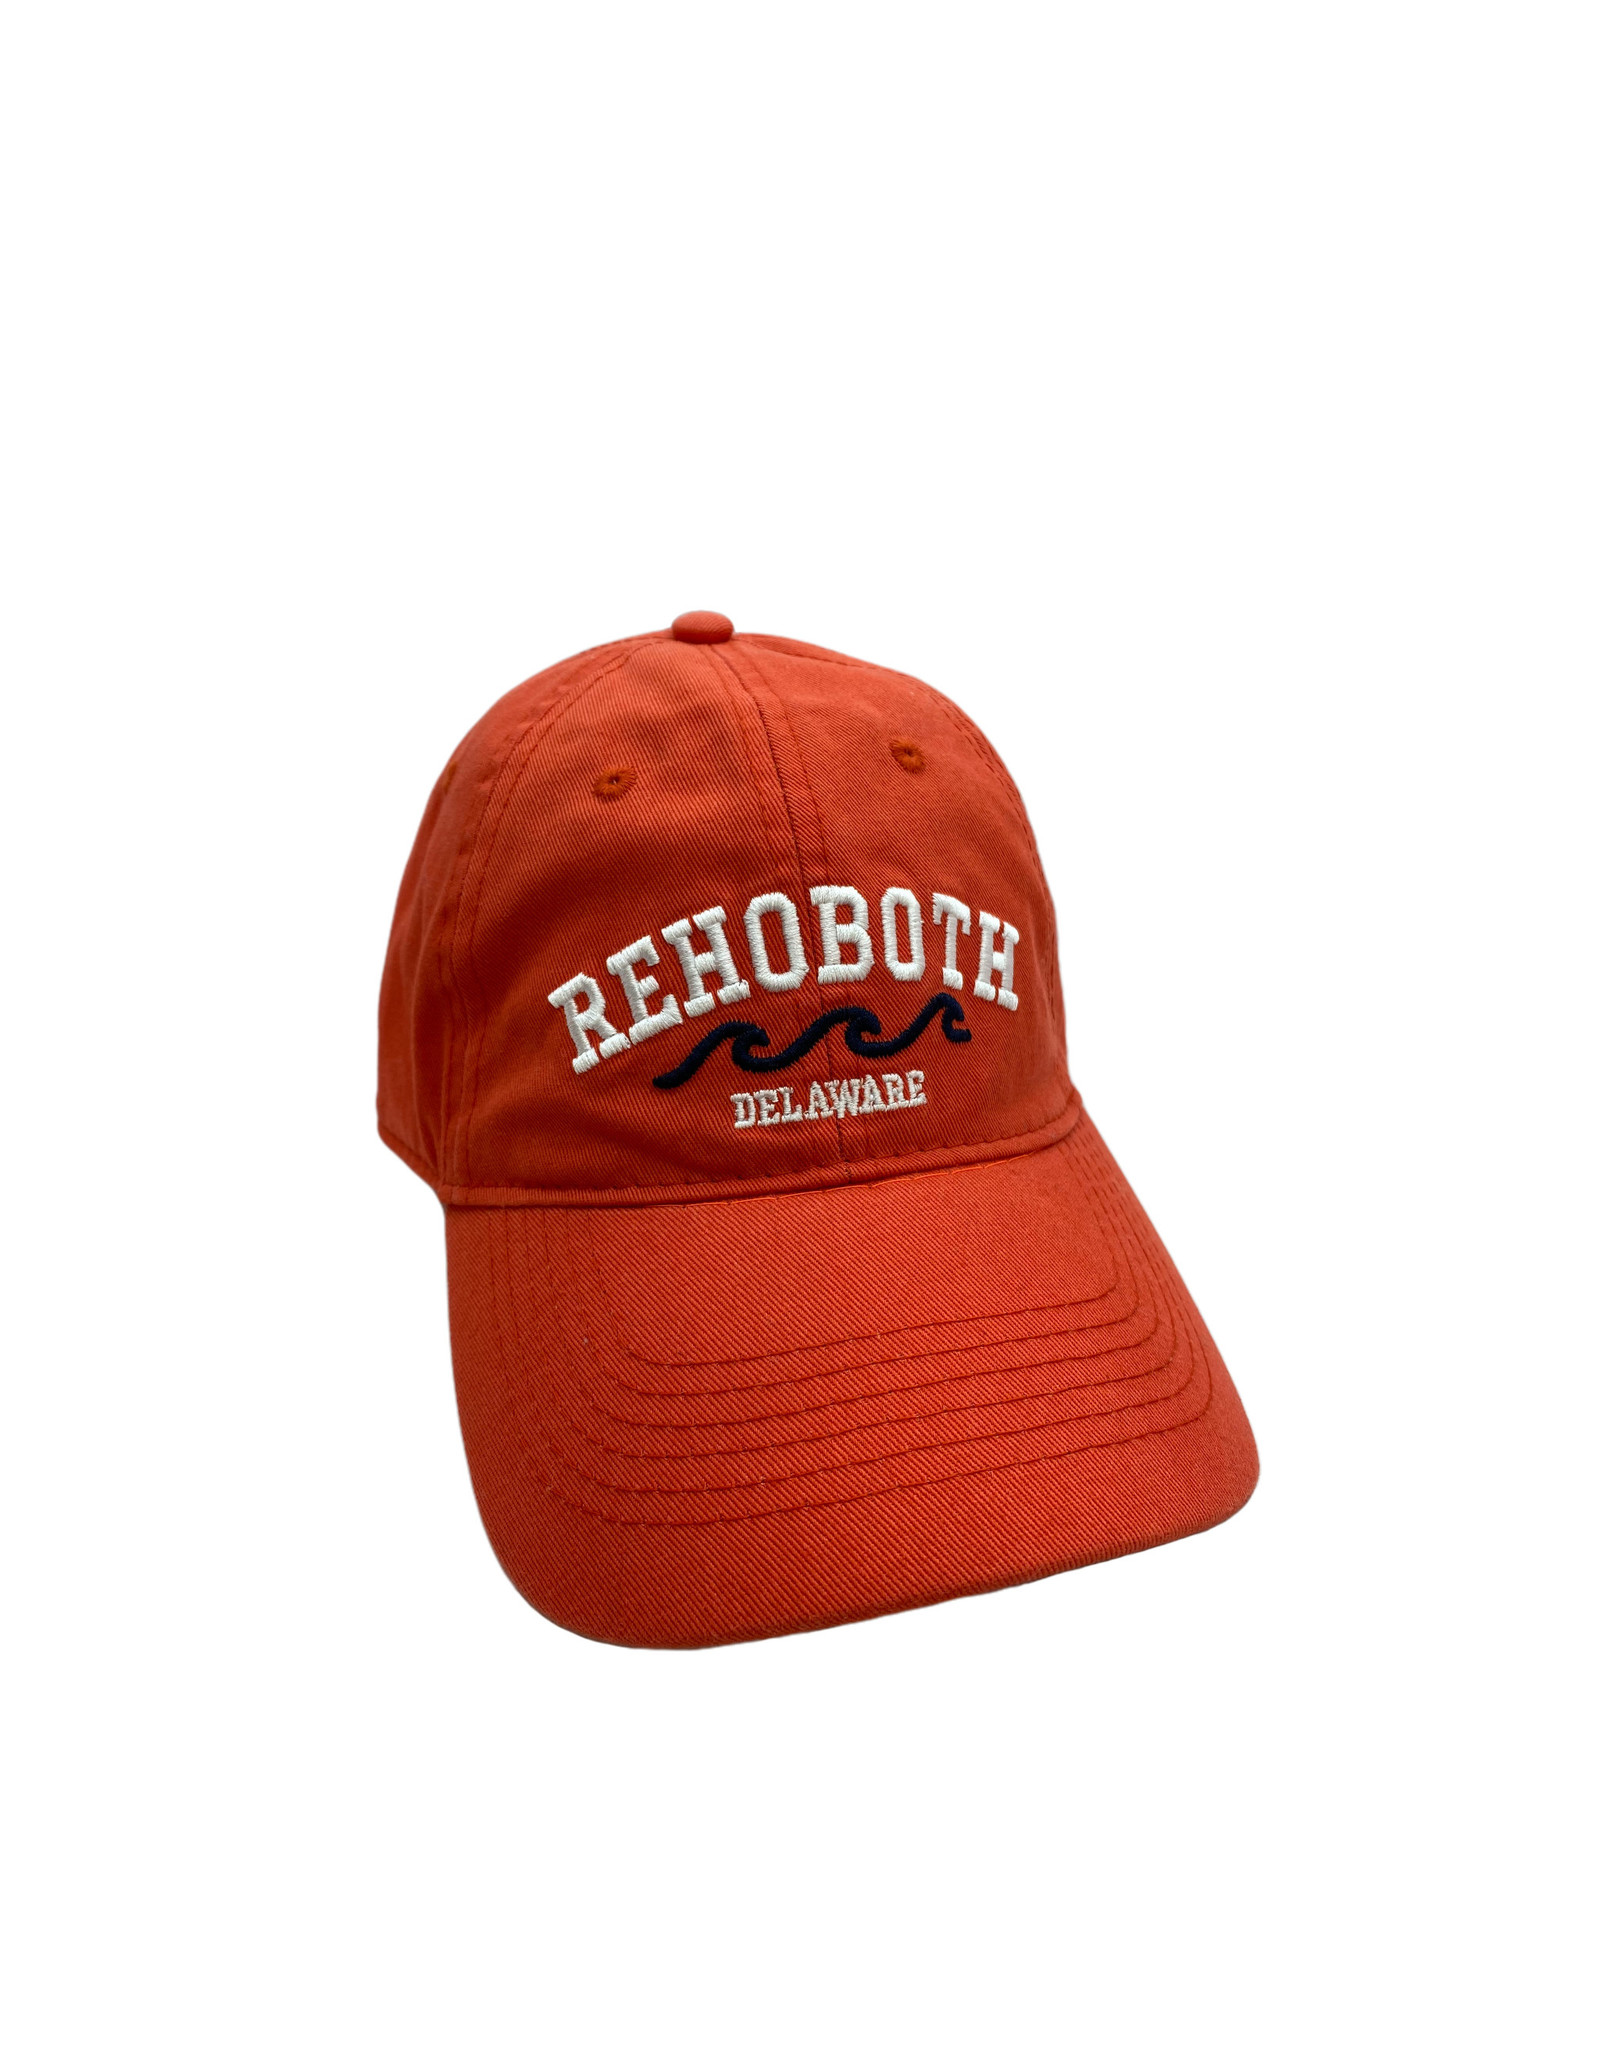 REHOBOTH LIFESTYLE CLASSIC COTTON BEACH HAT